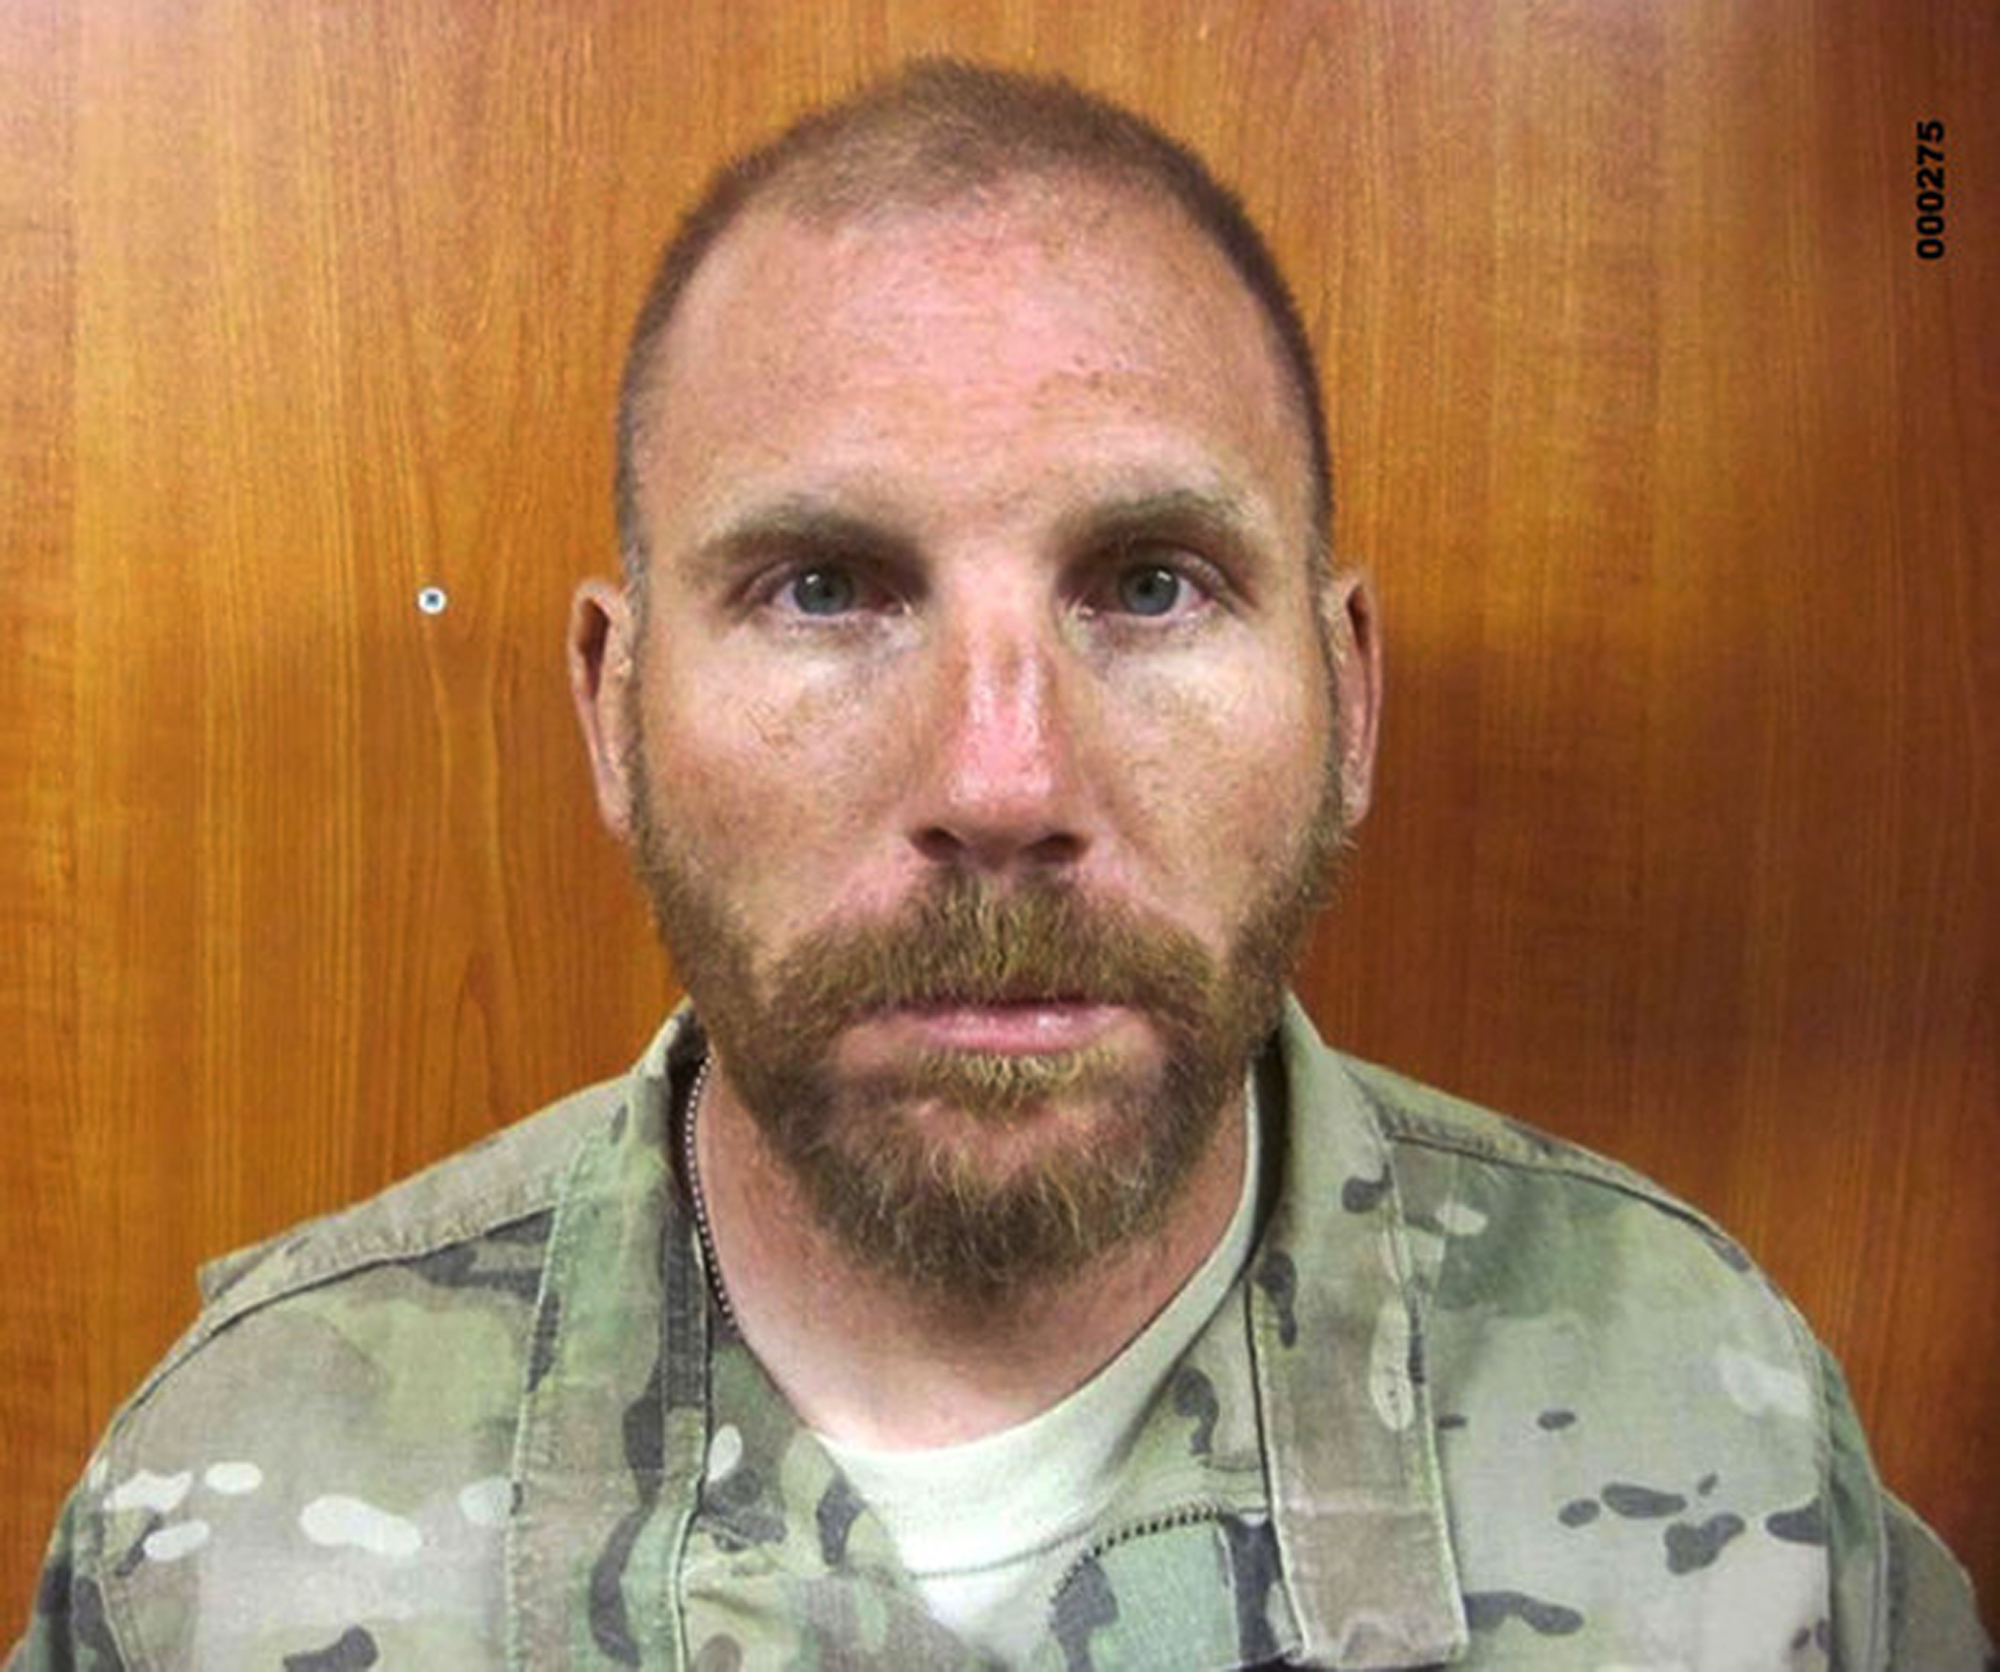 Staff Sergeant Robert Bales in March, 2012. (U.S. Army/Tacoma, Washington News-Tribune/AP)